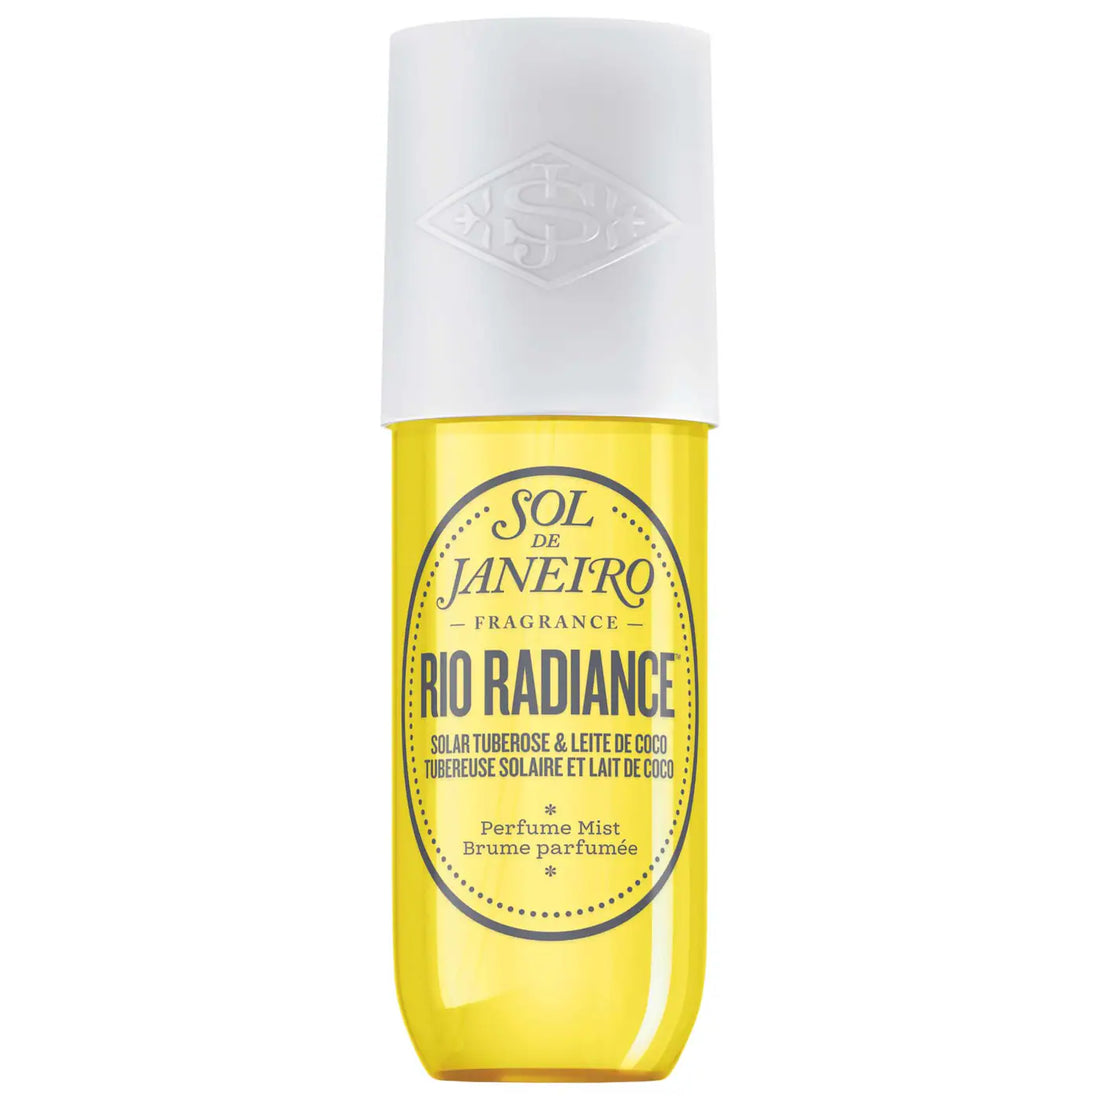 Rio Radiance Perfume Mist 240ml- Sol de Janeiro.